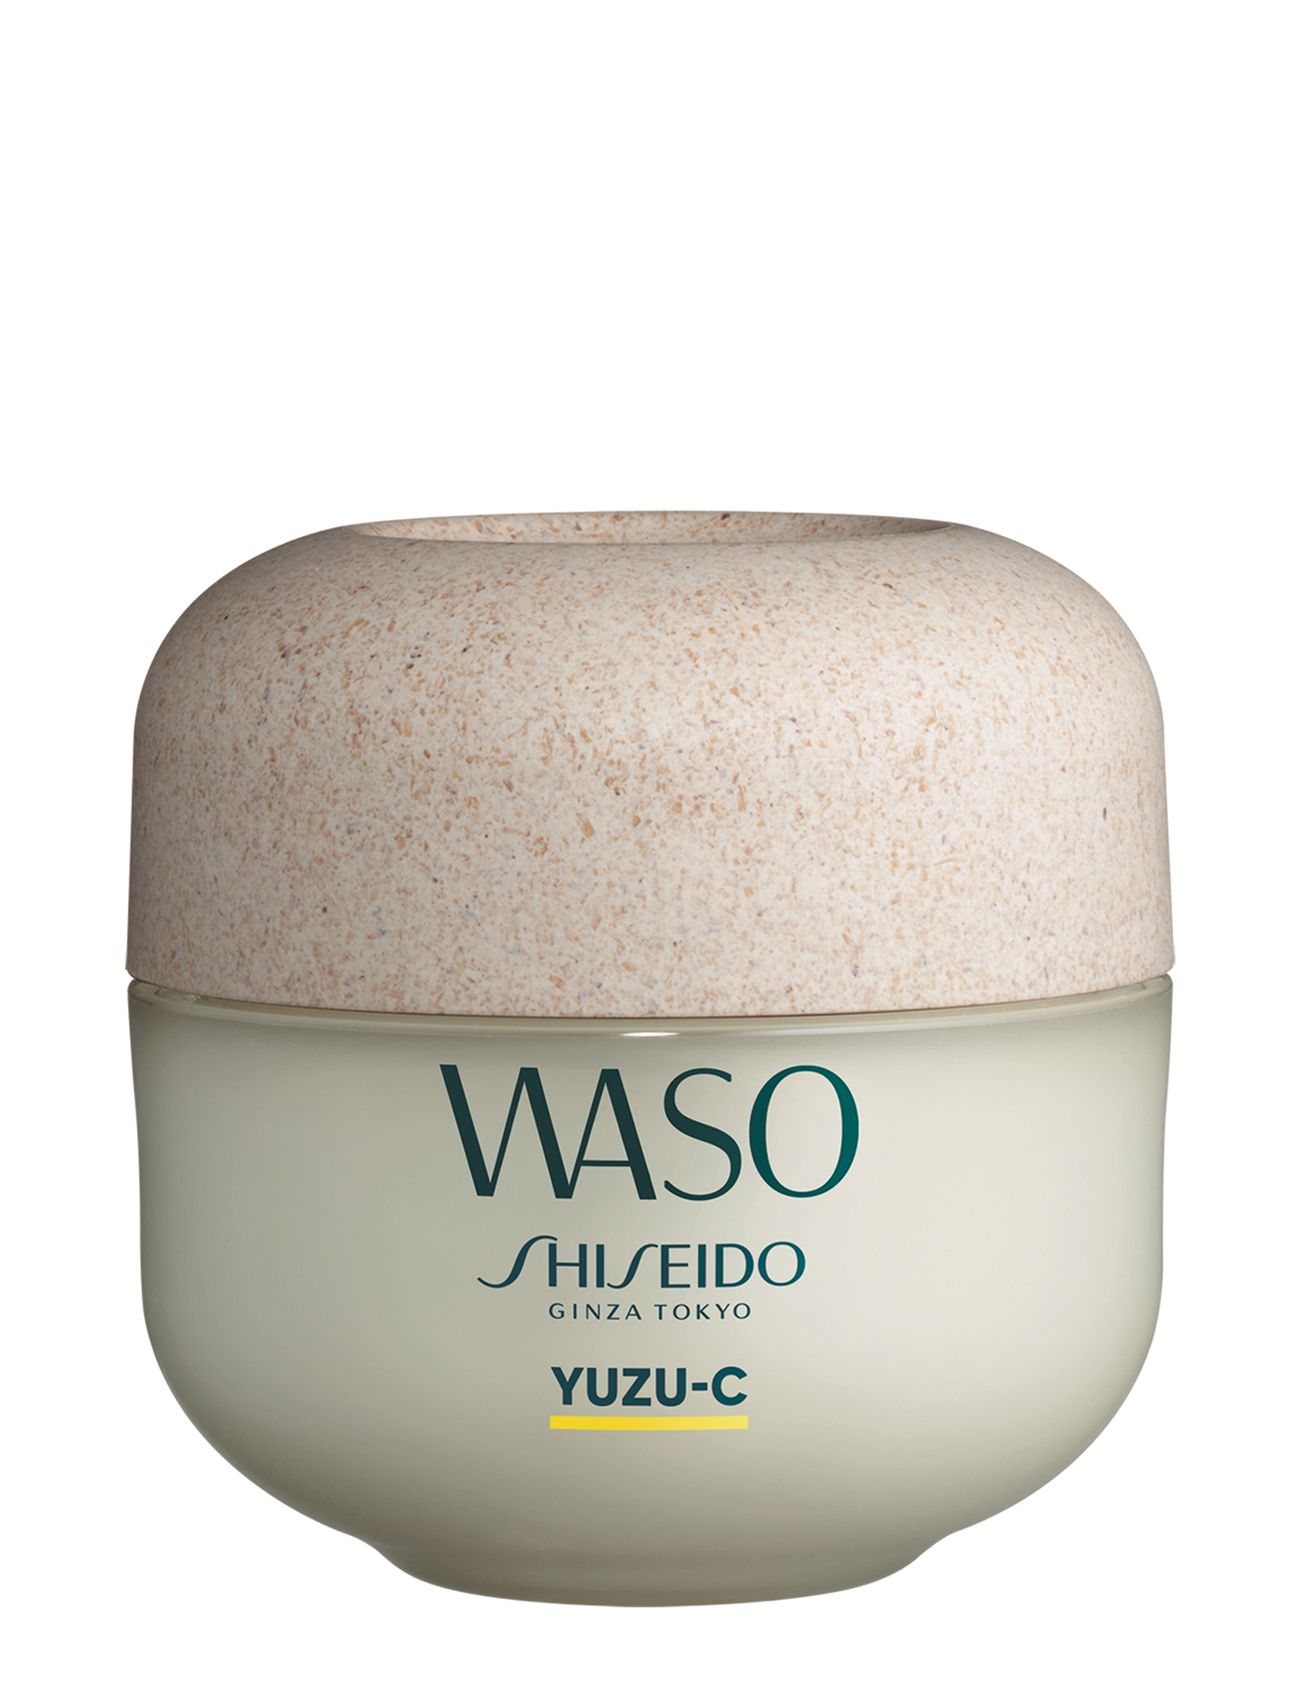 "Shiseido Waso Yuzu-C Beauty Sleeping Mask Beauty Women Skin Care Face Face Masks Sleep Mask Green Shiseido"